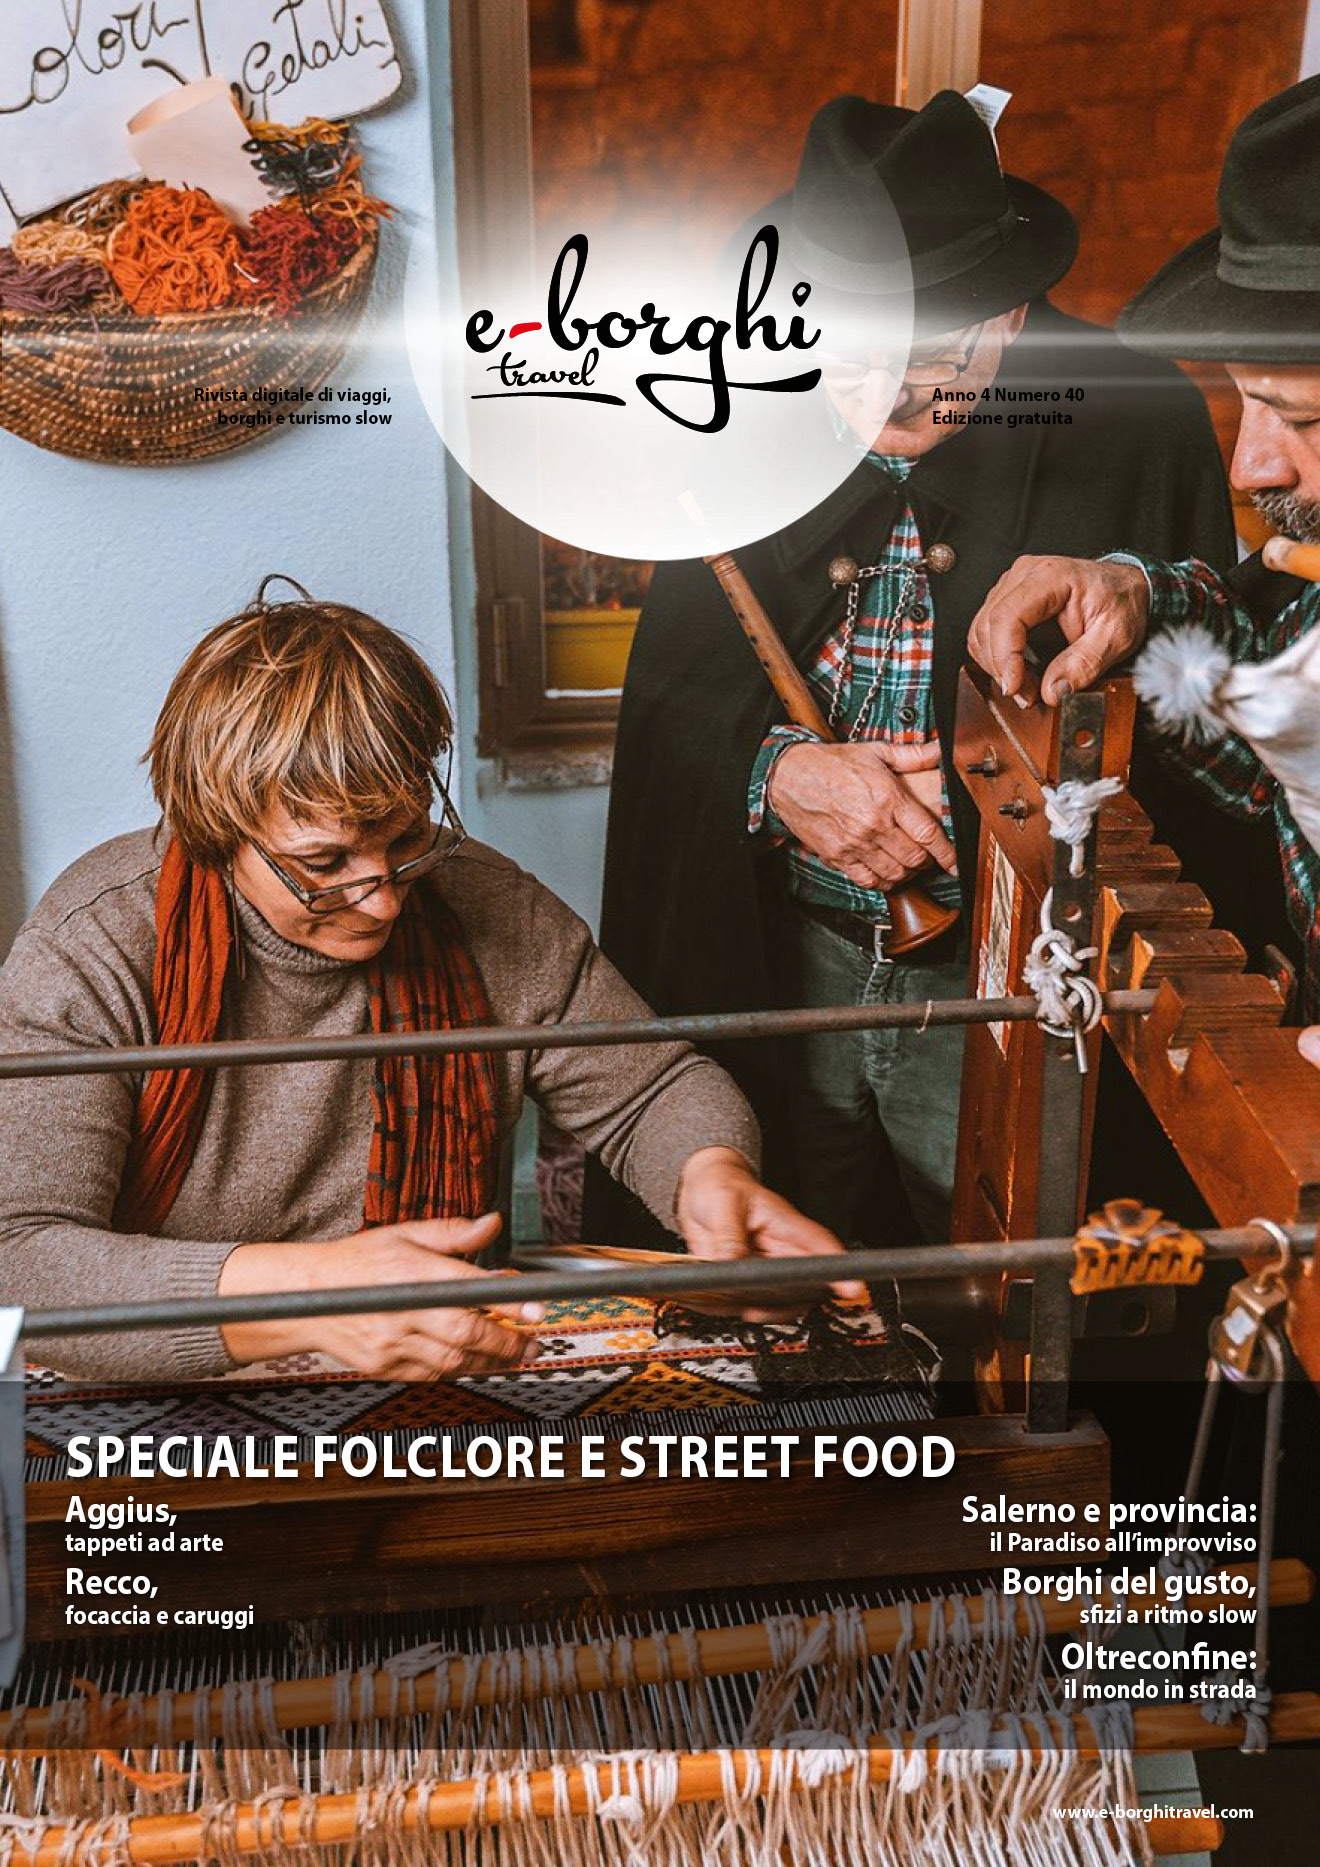 e-borghi travel 40: Speciale folclore e street food